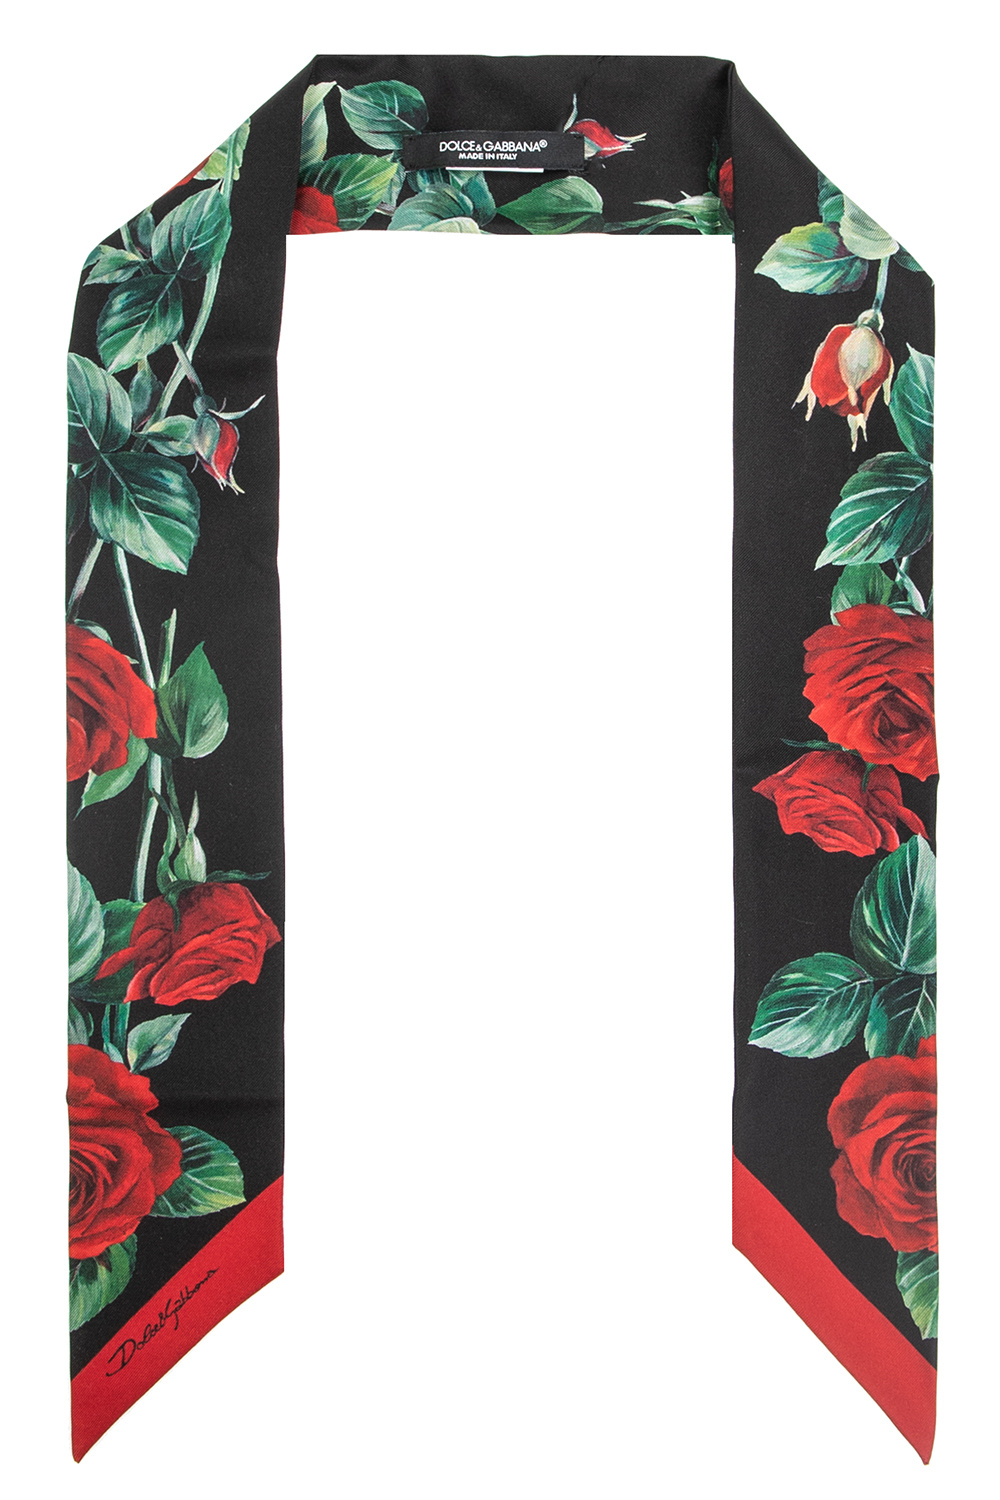 Dolce & Gabbana Neckerchief with floral motif